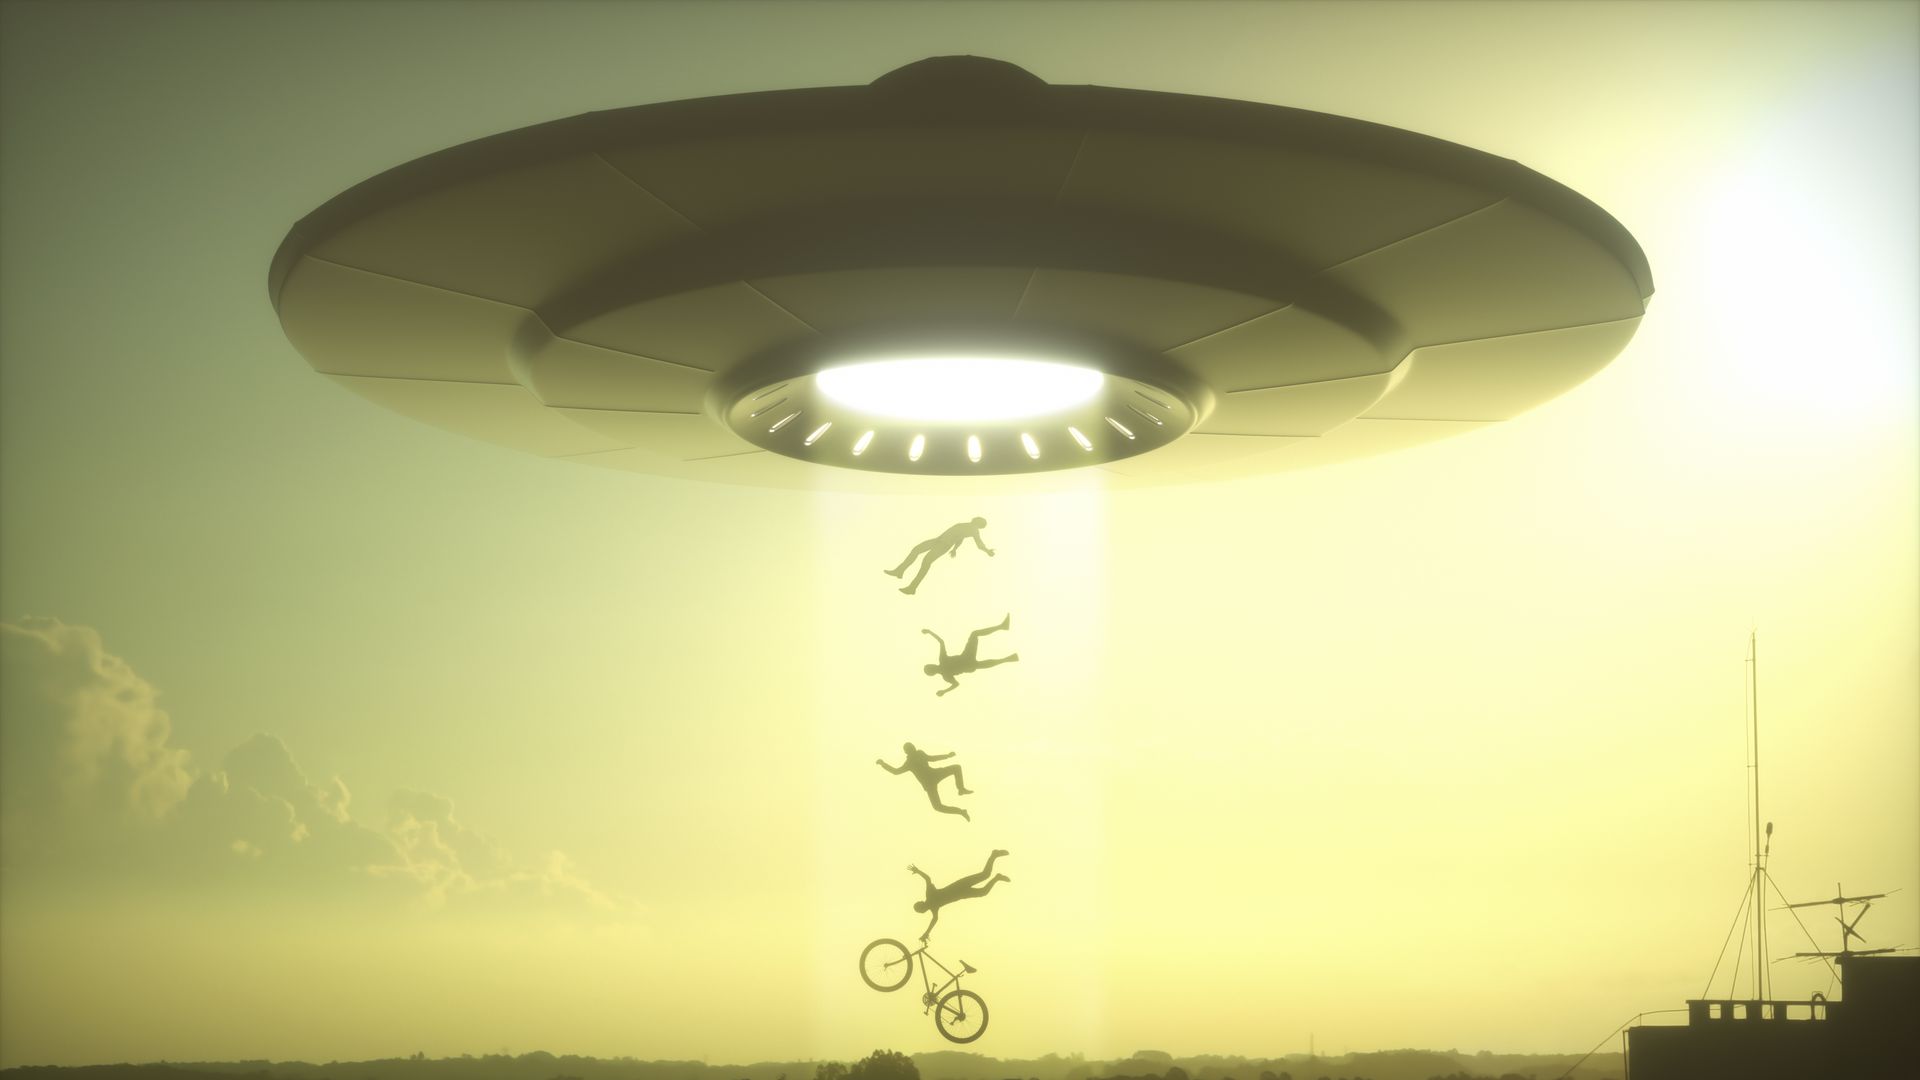 Still Think UFOs Aren’t Real?